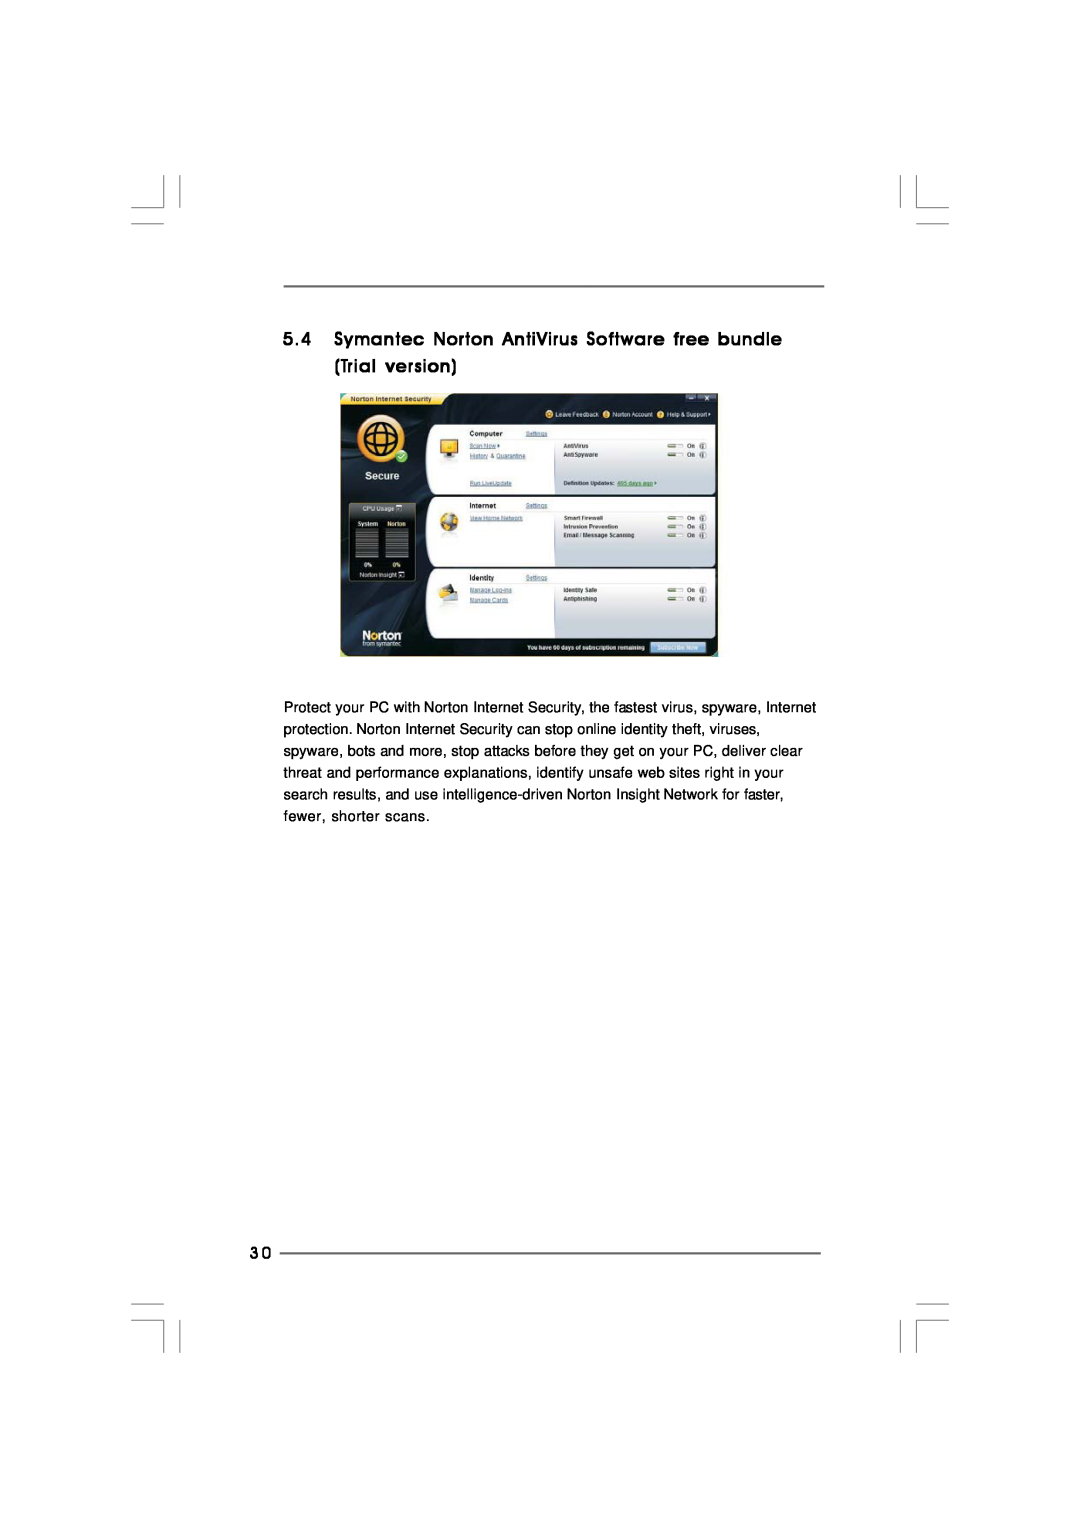 ASRock ION 3D Series manual Symantec Norton AntiVirus Software free bundle Trial version 